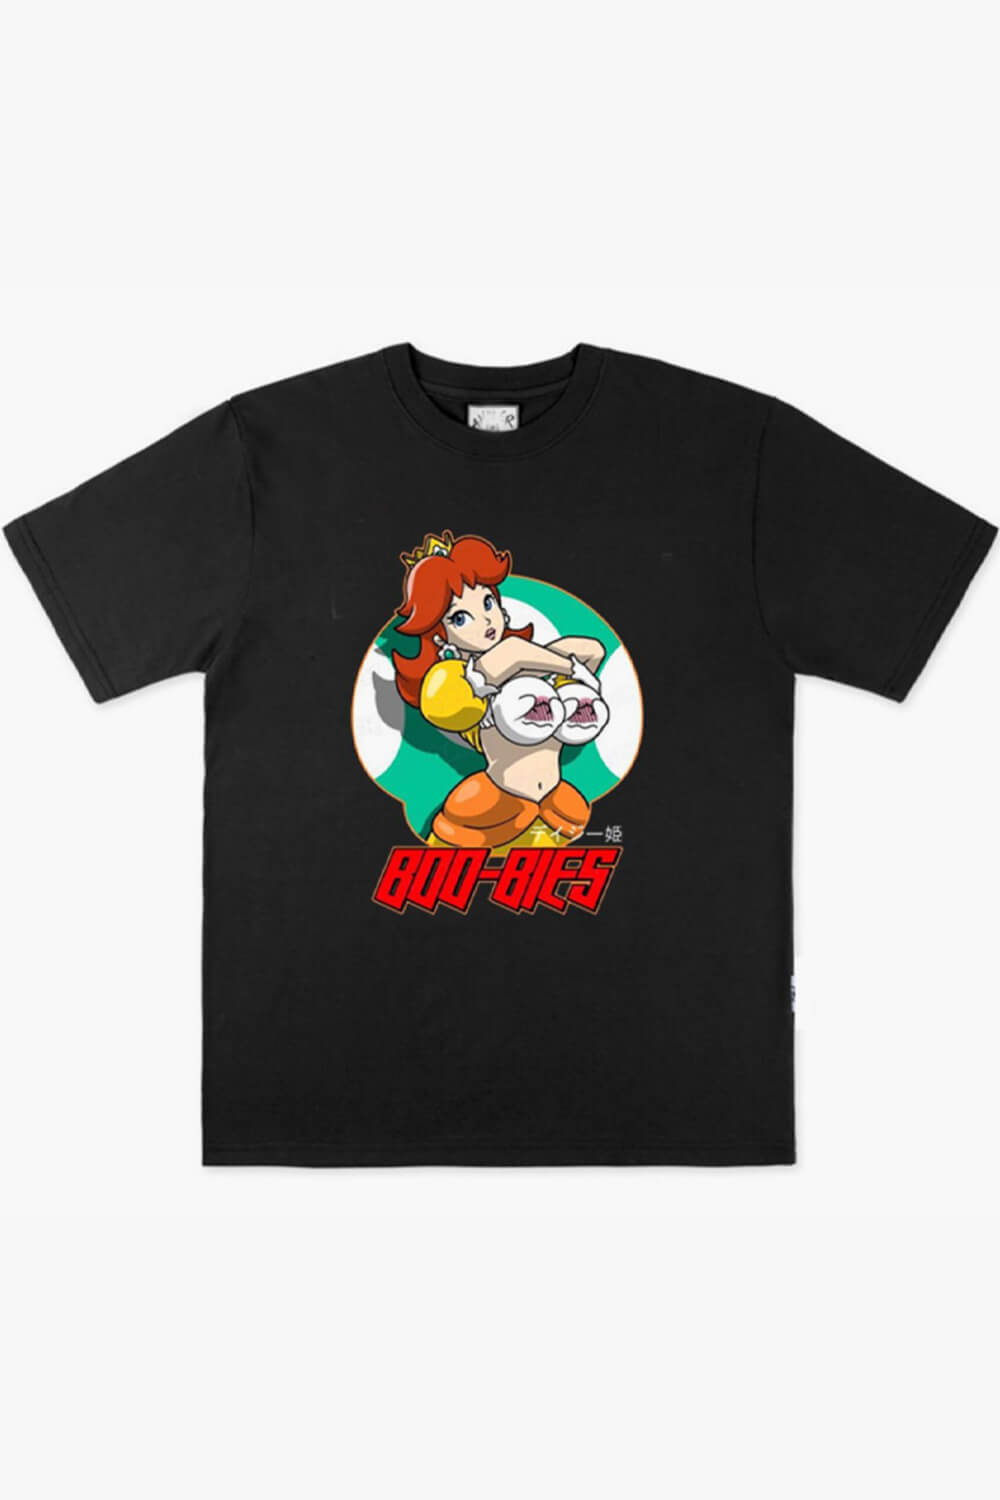 Arcade Kid Gamer Aesthetic T-Shirt Boo-Bies Princess Daisy